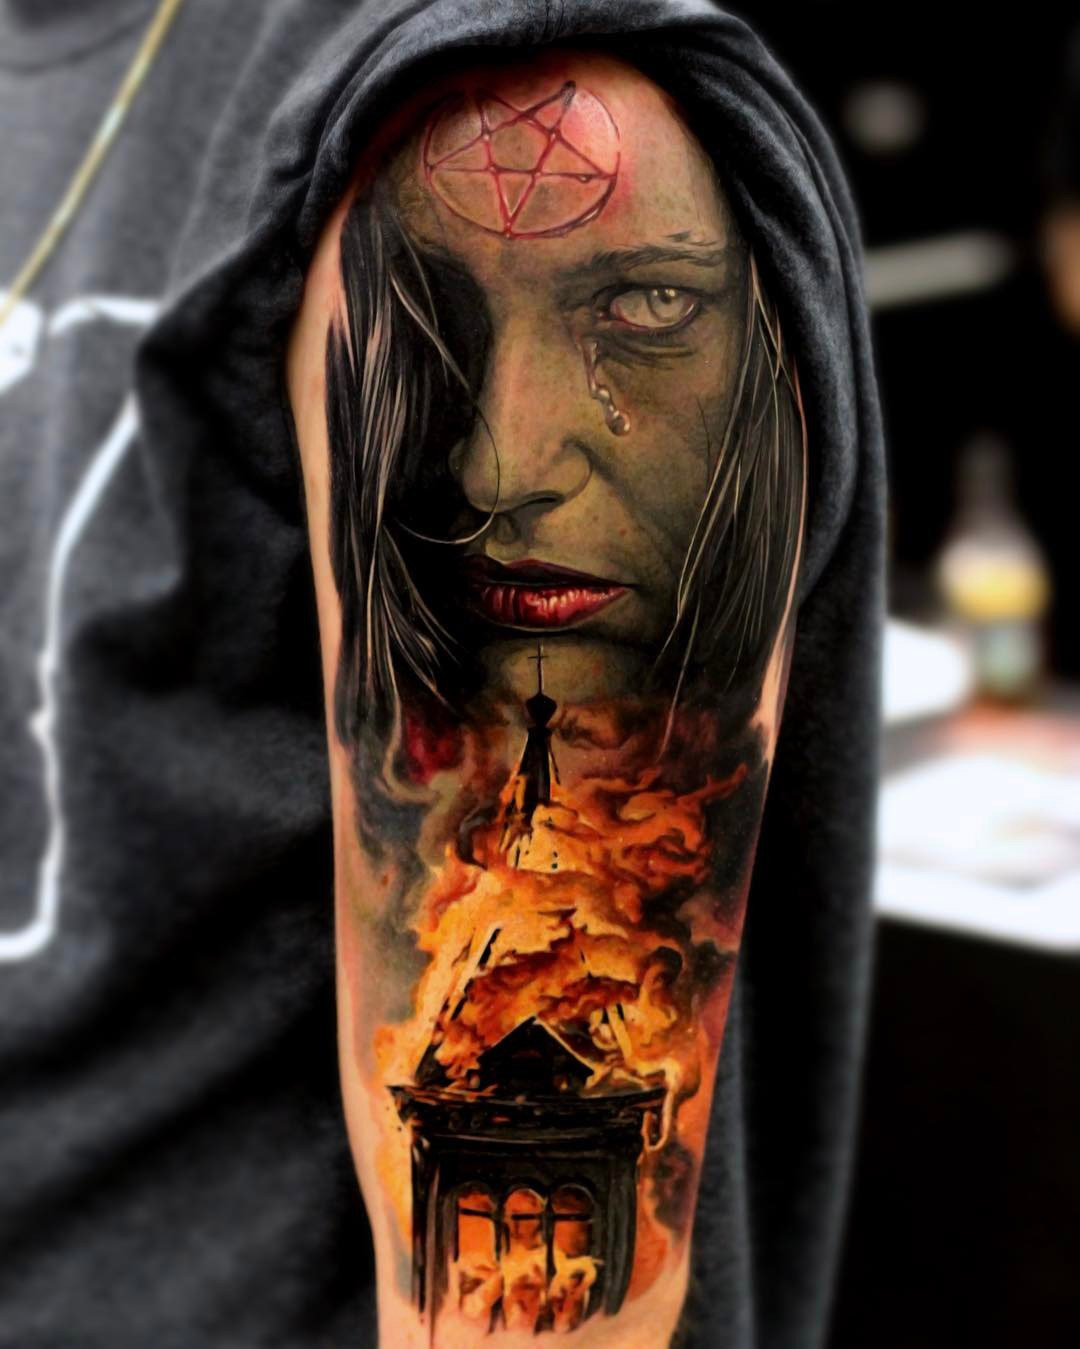 Satanic Tattoo with a Burning Church